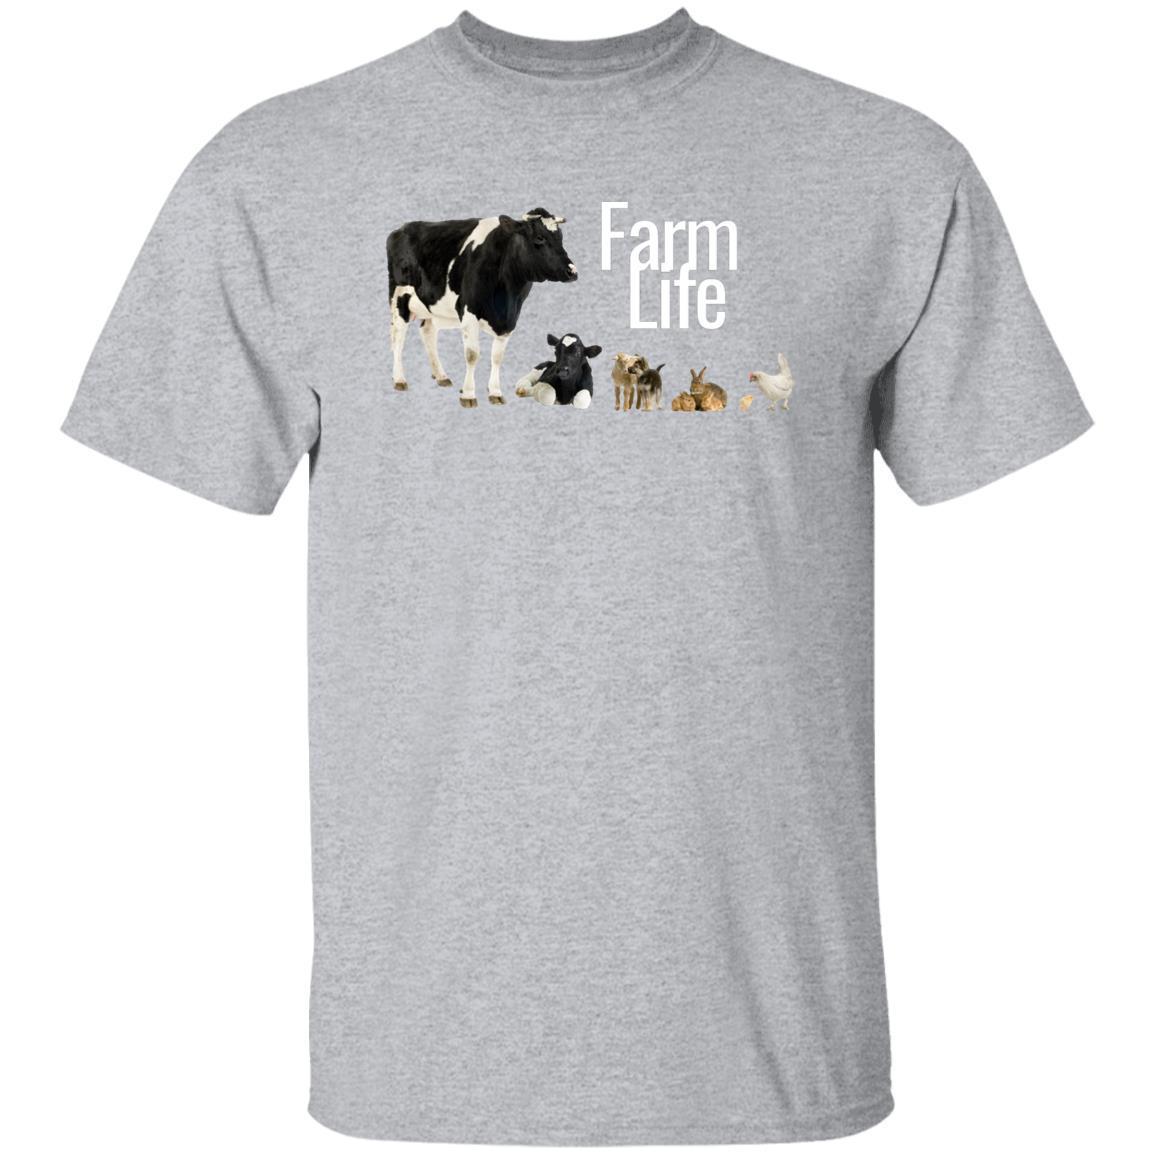 Farm Life (White Print) G500 5.3 oz. T-Shirt